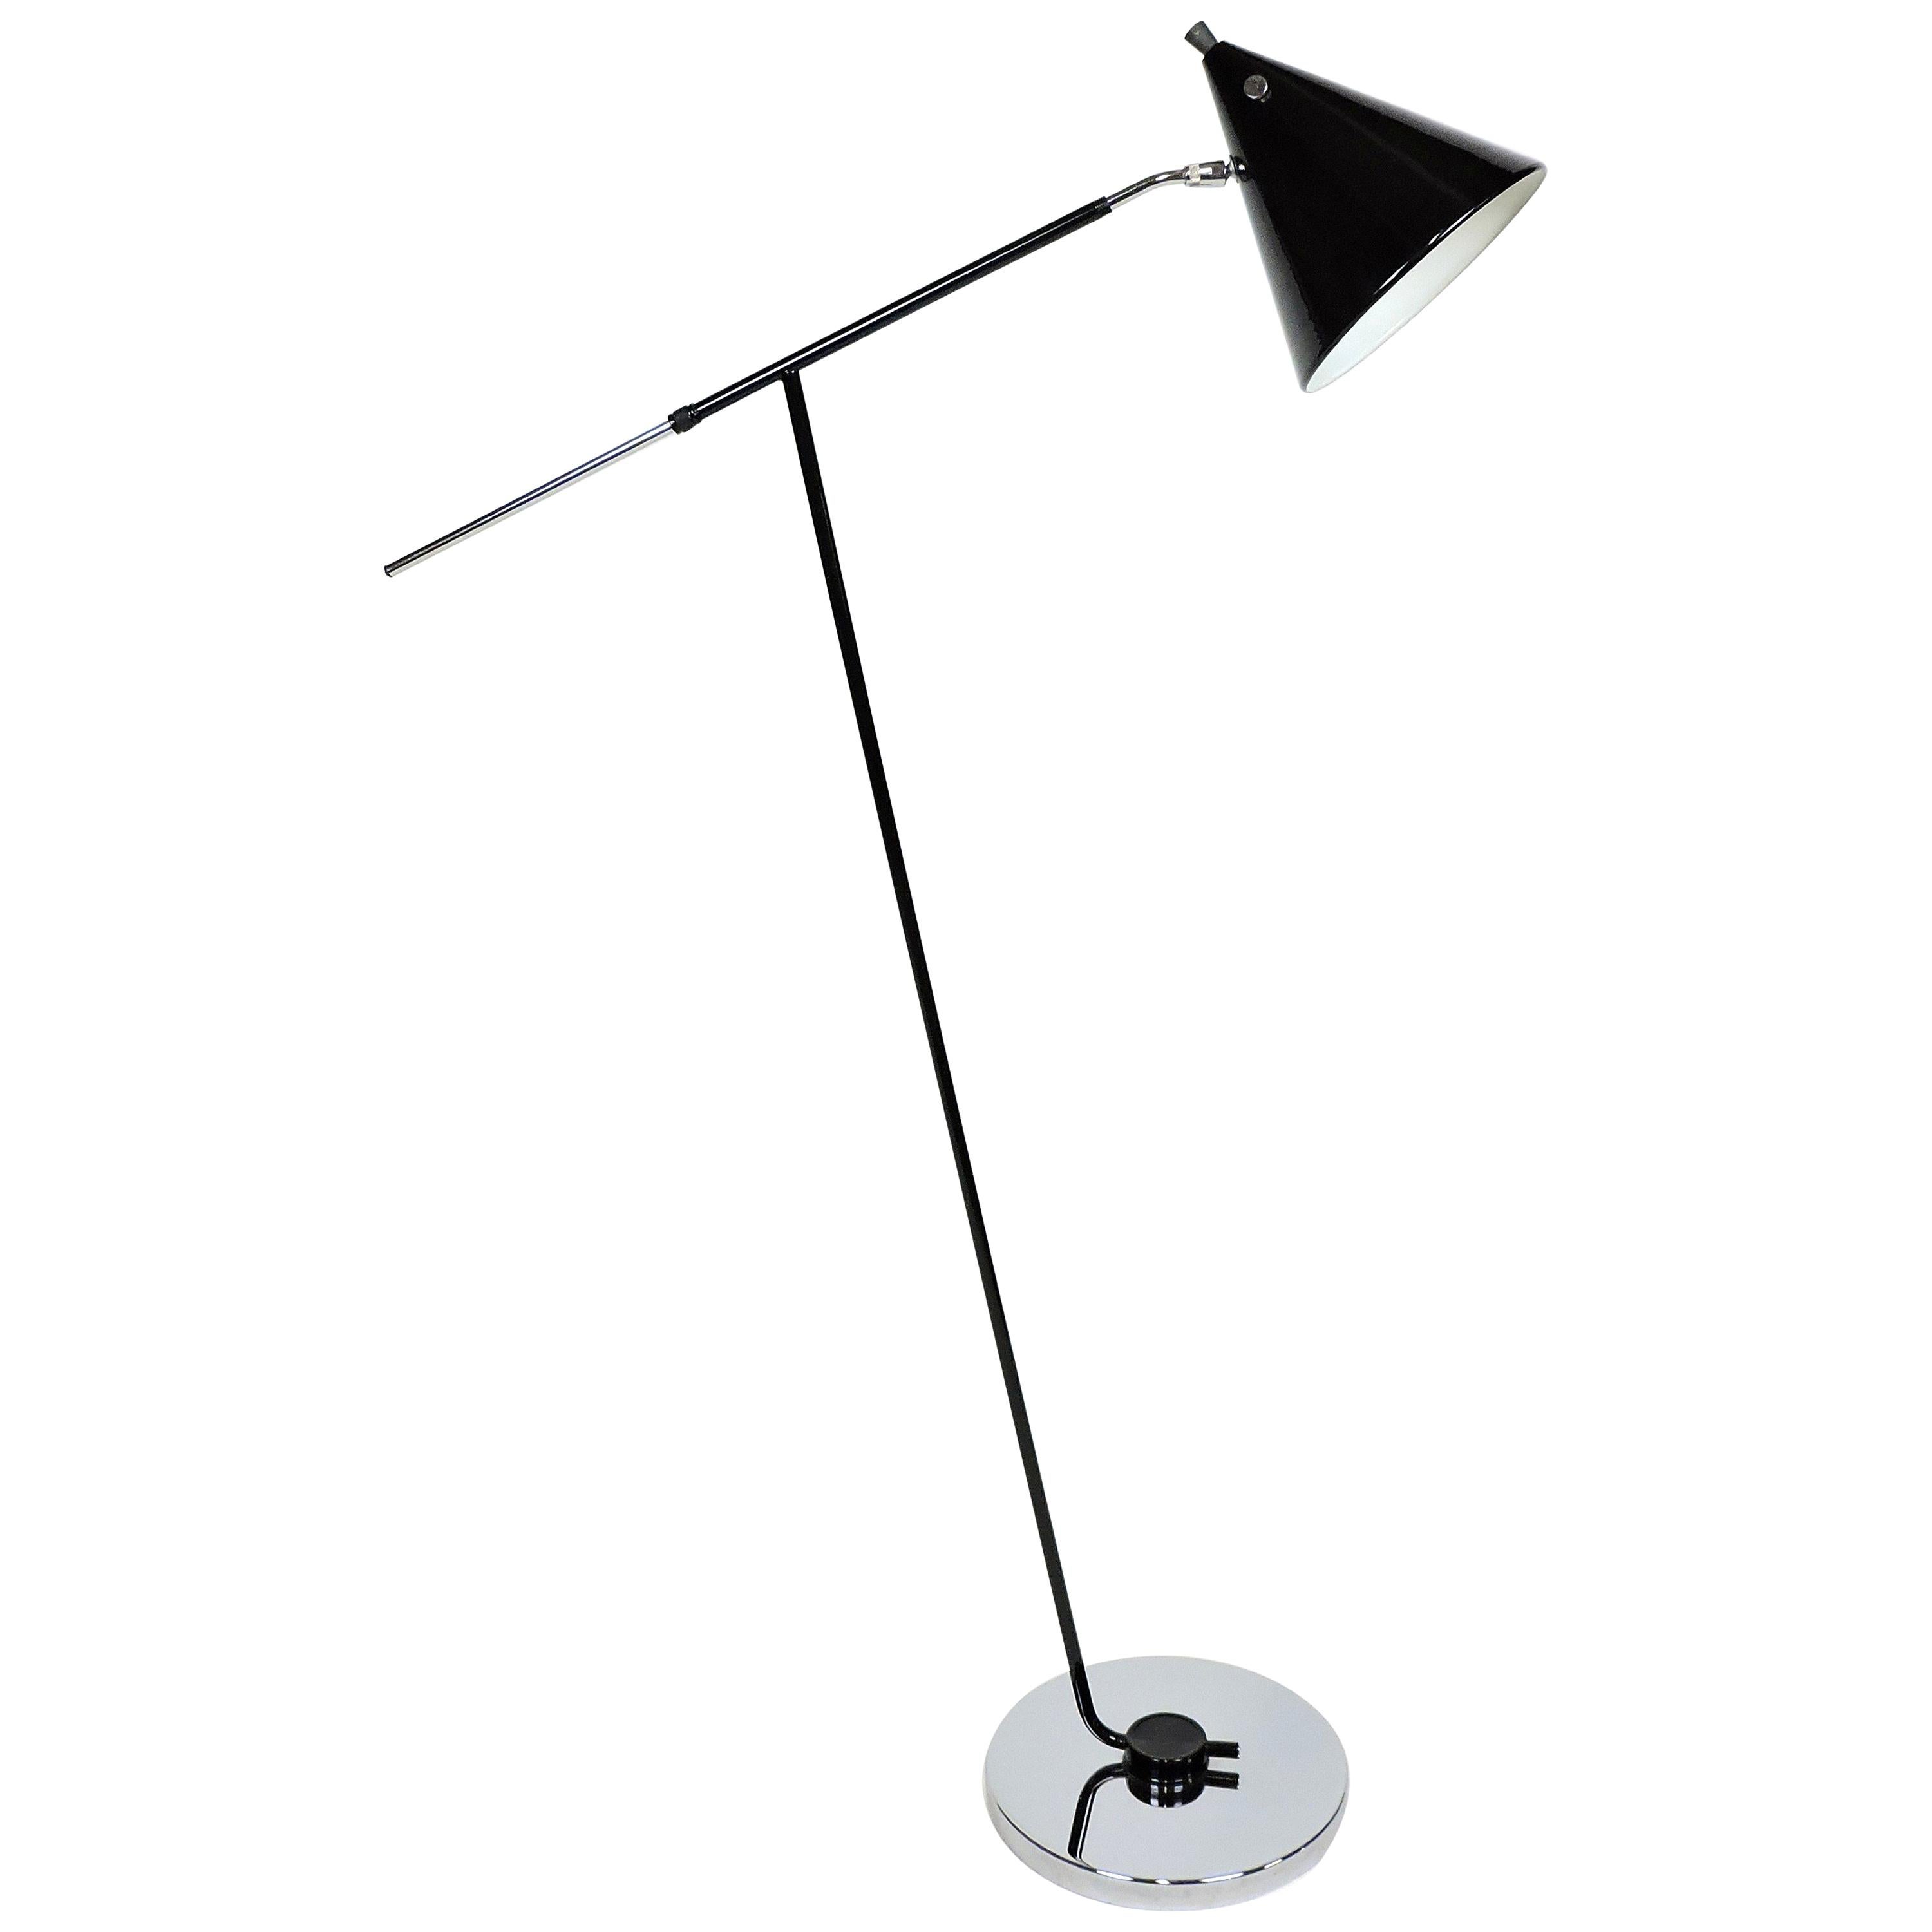 Italian Mid-Century Modern Black & Chrome Adjustable Floor Lamp with Cone Shade